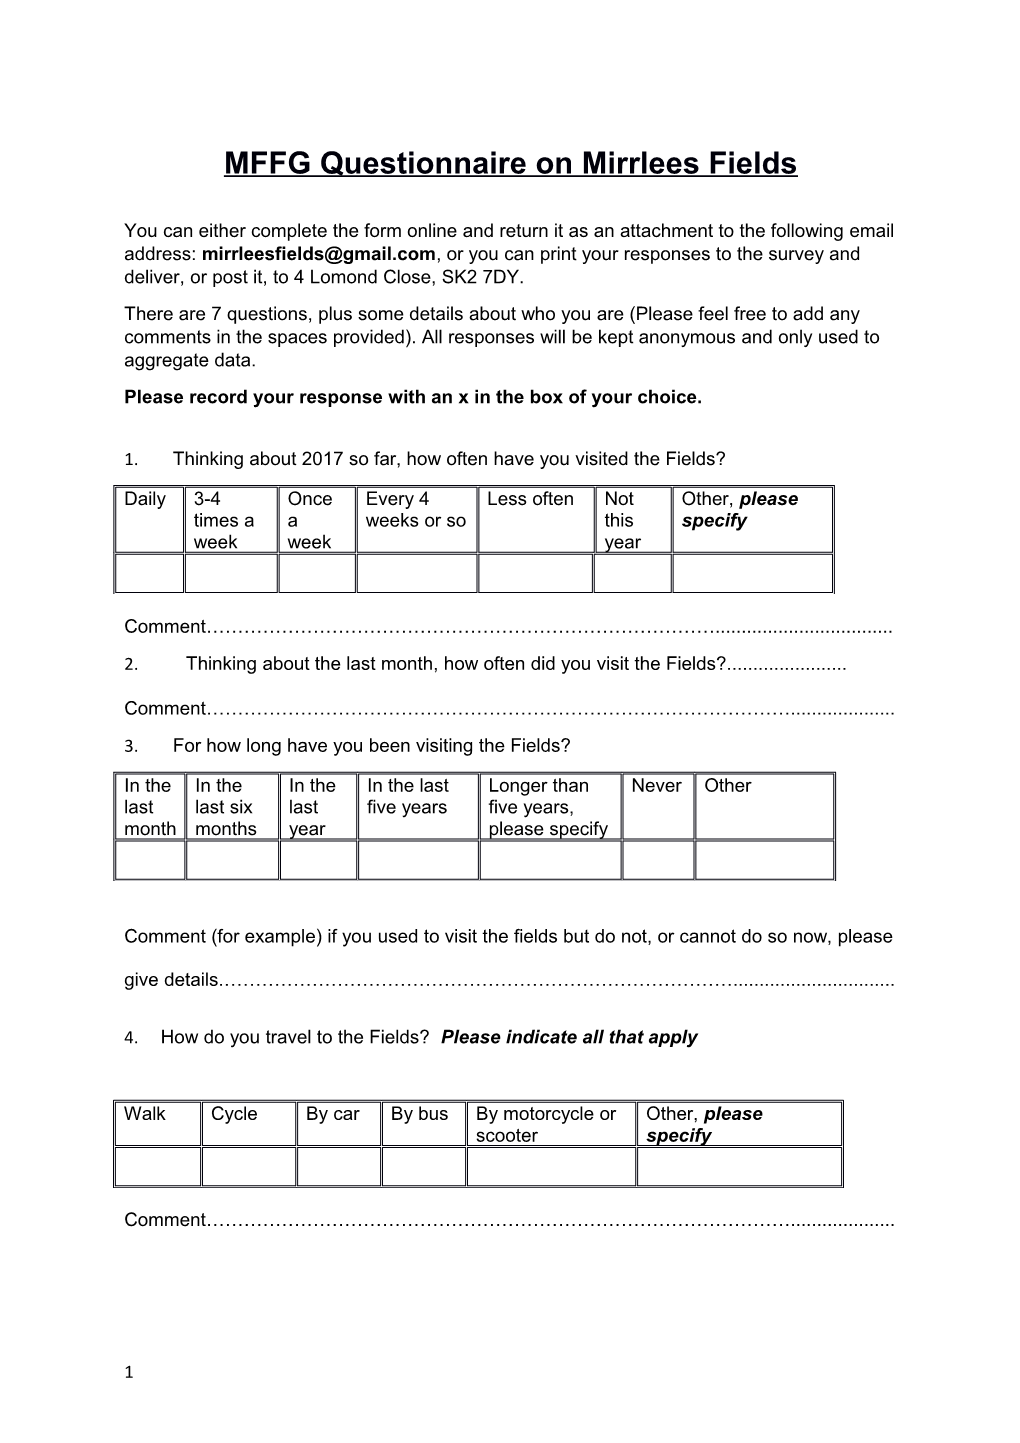 MFFG Questionnaire on Mirrlees Fields